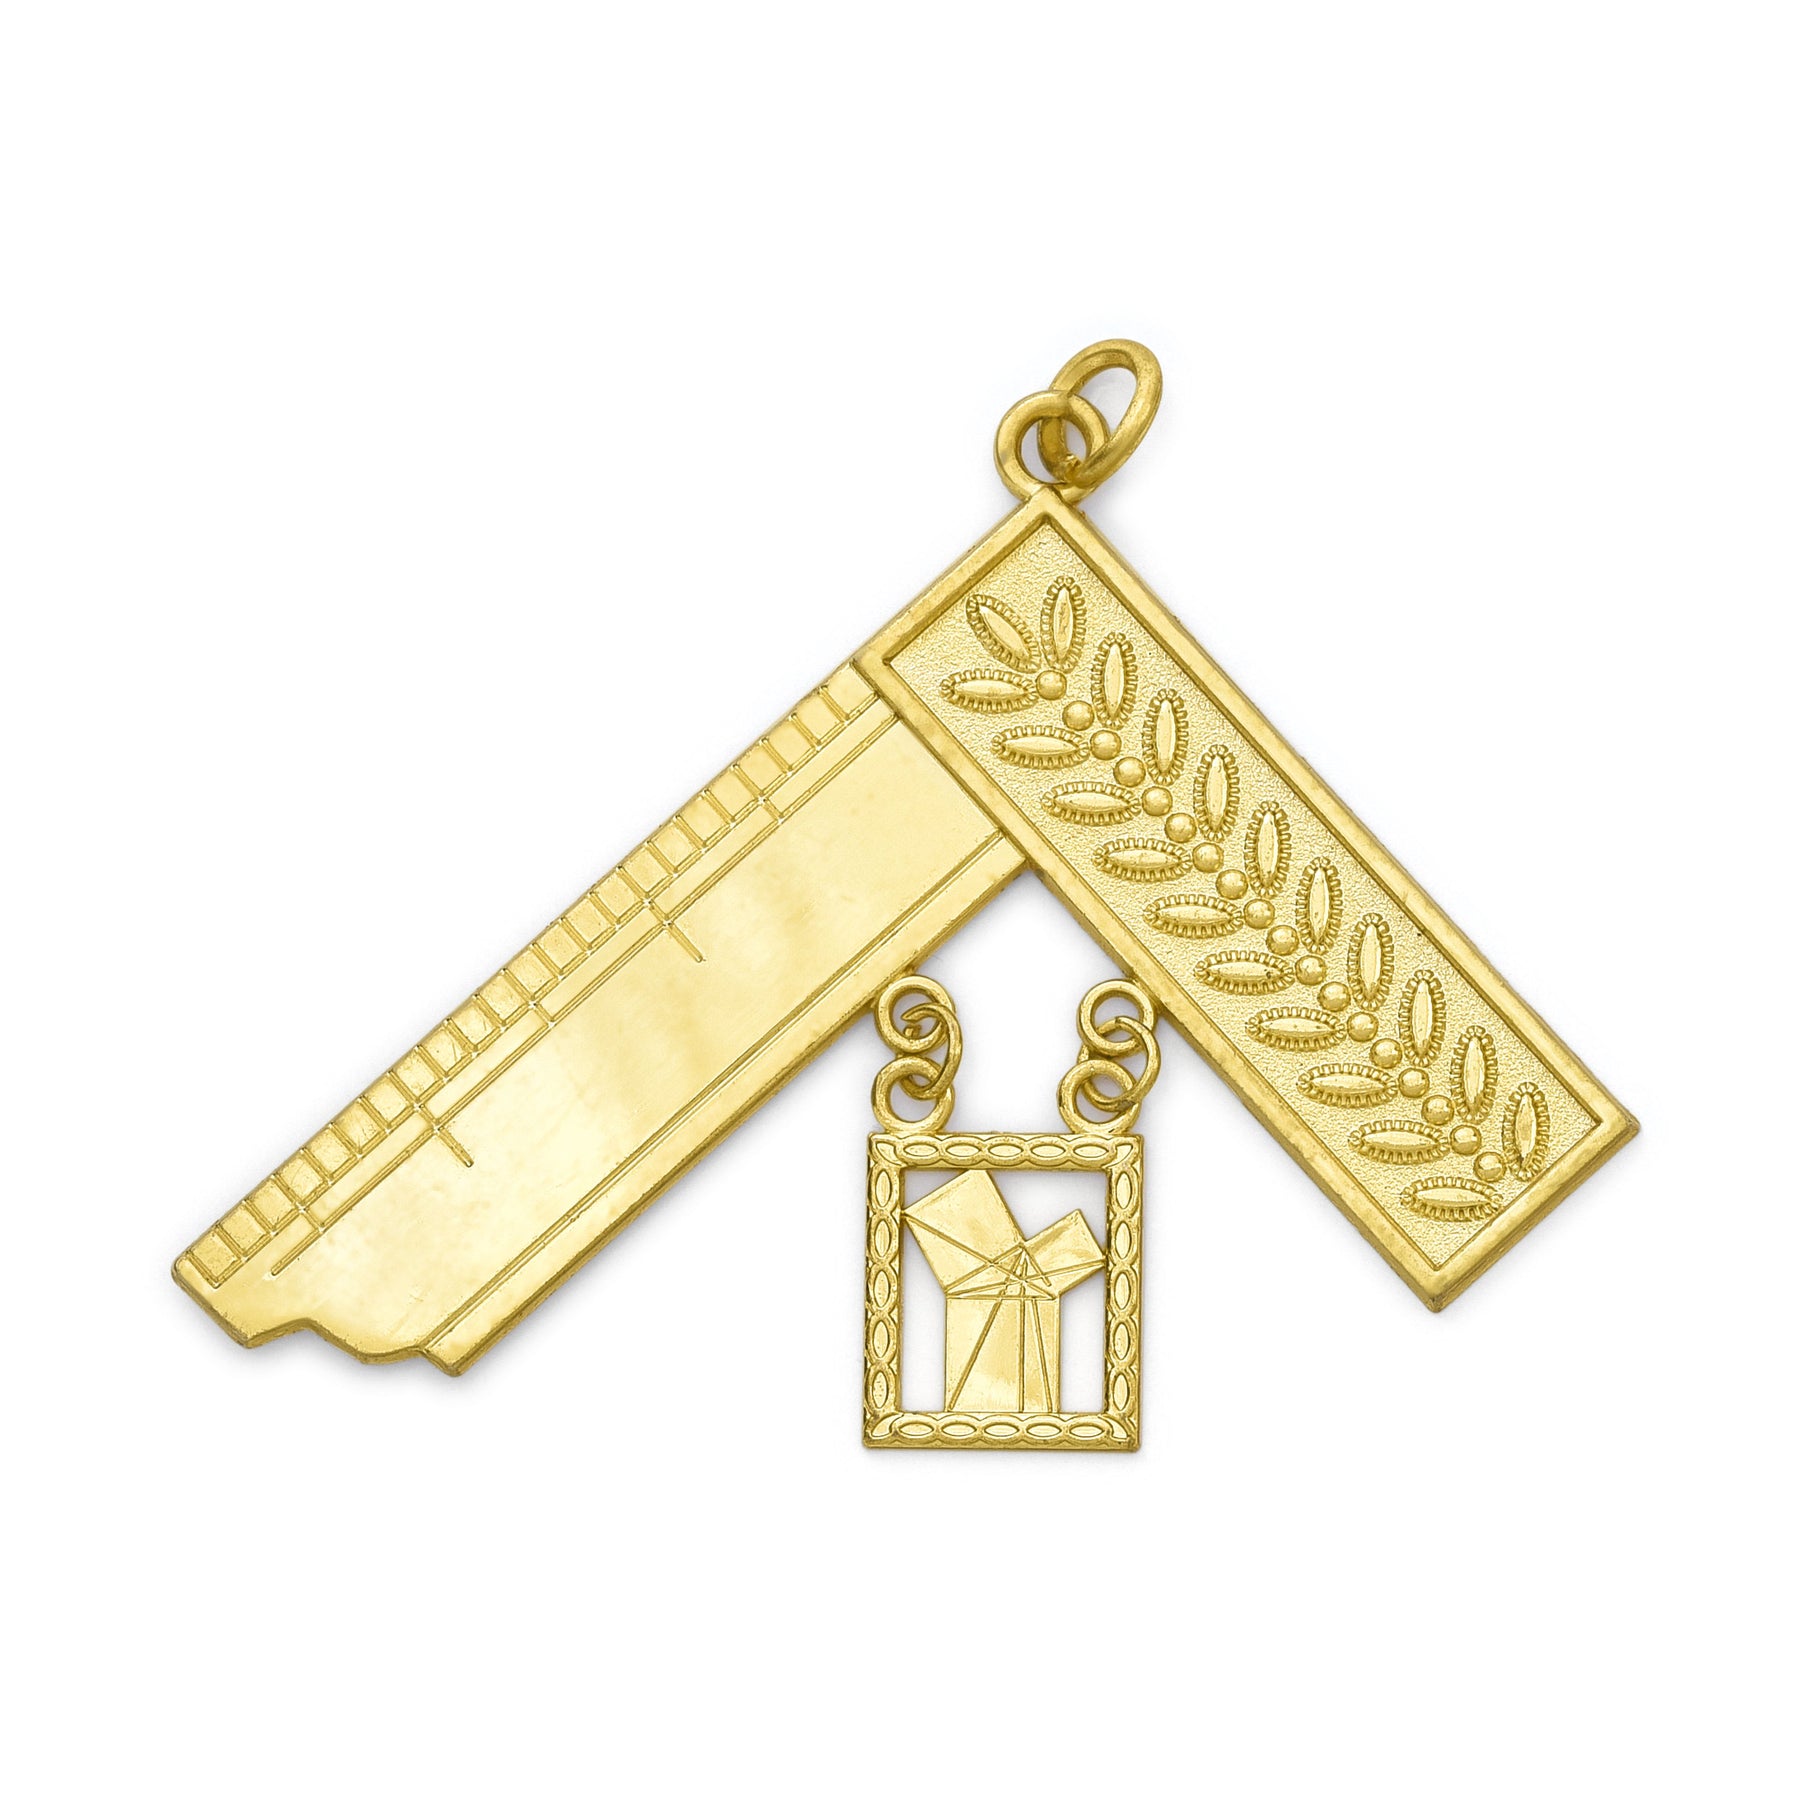 Past Master Craft English Regulation Collar Jewel - Gold Coated Euclid’s 47th Problem - Bricks Masons